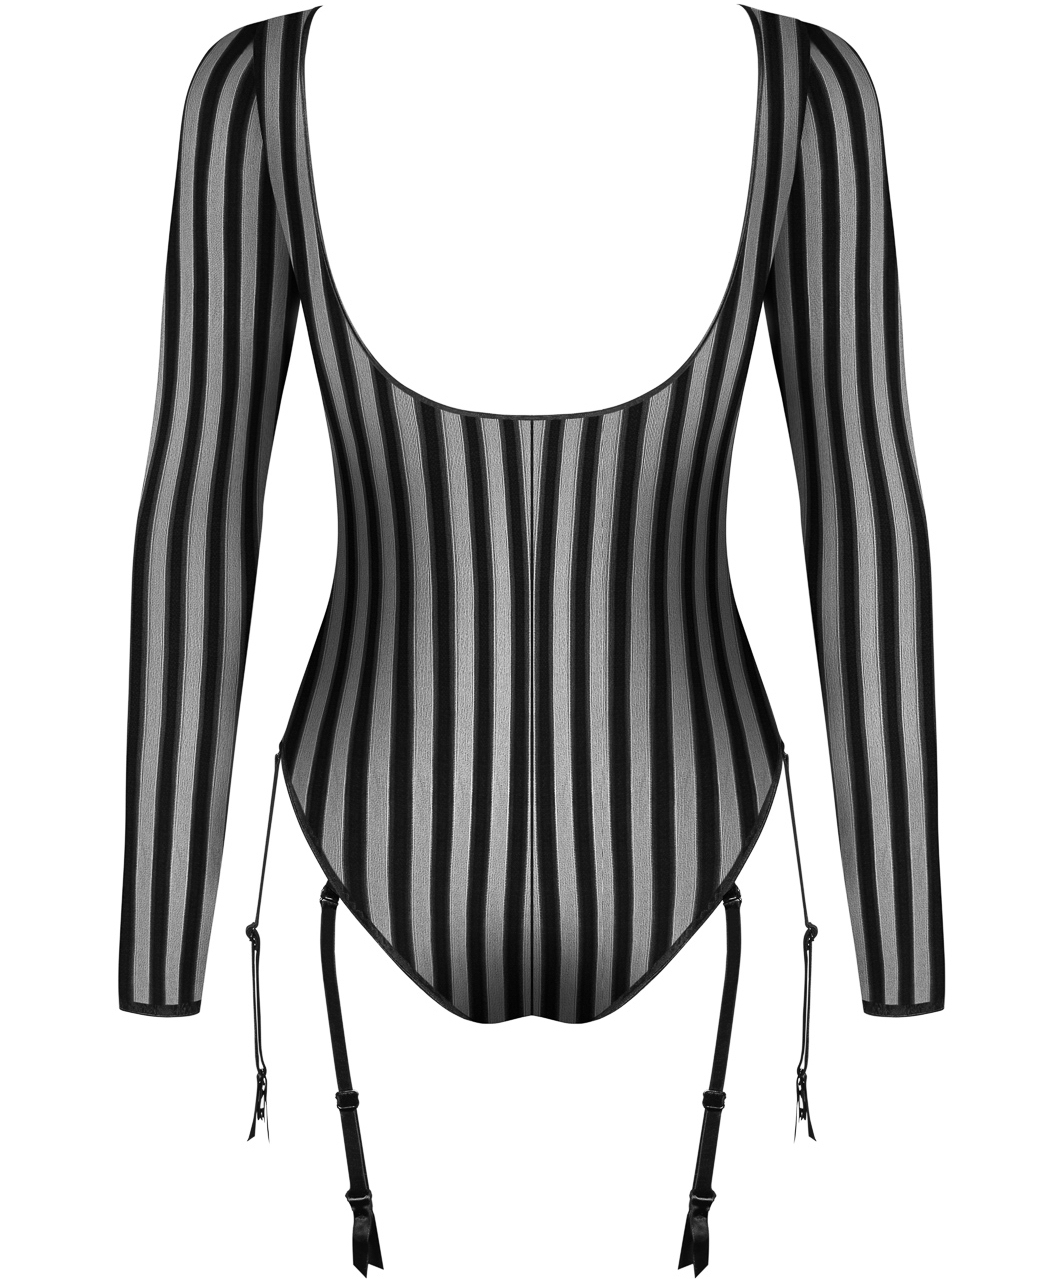 Noir Handmade black striped bodysuit with suspenders